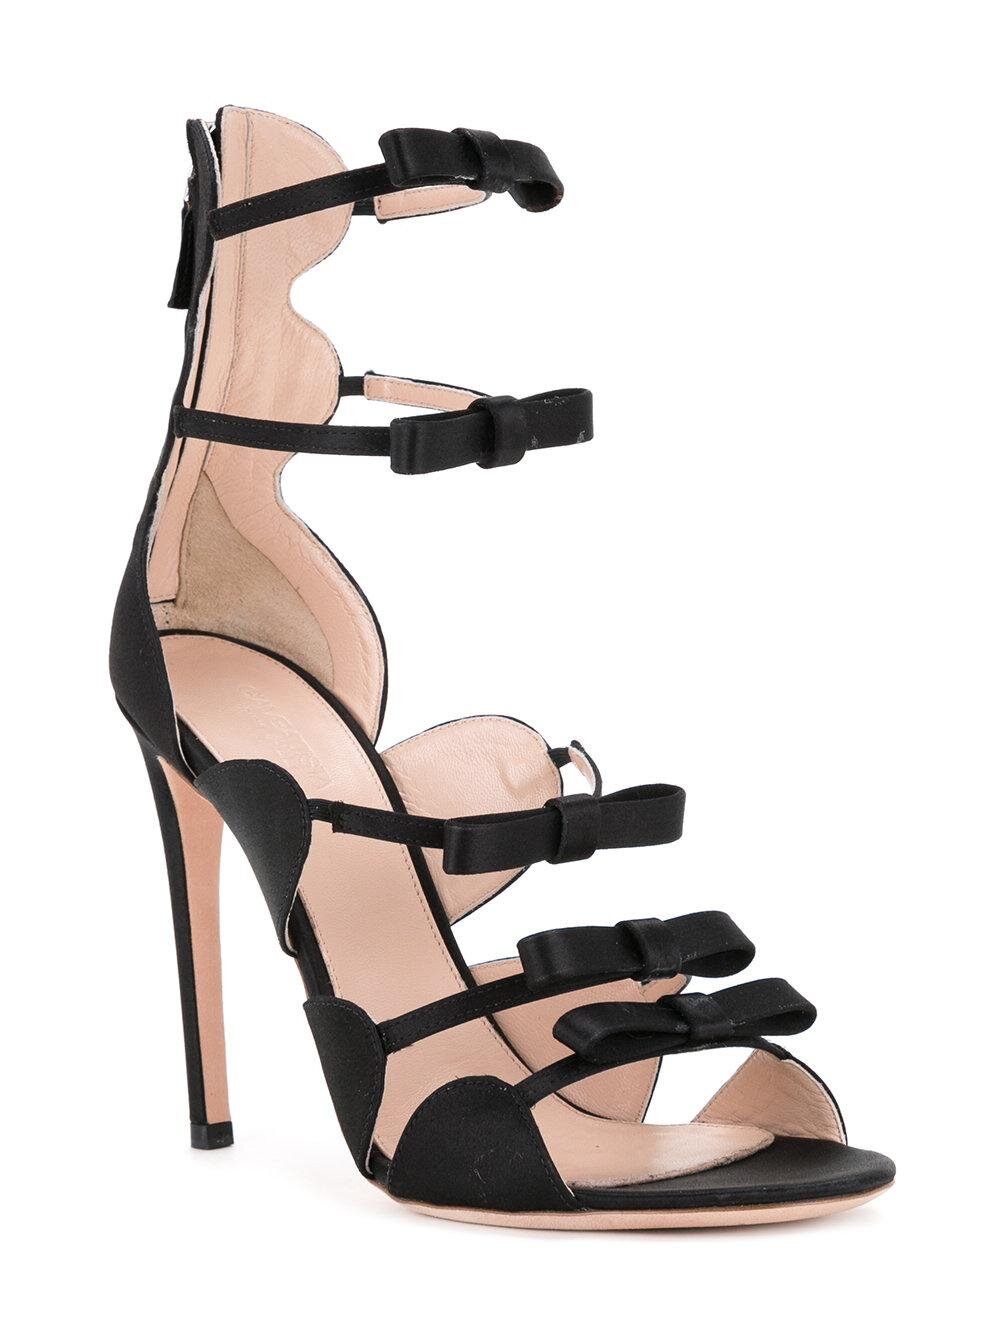 Giambattista Valli Bow-Embellished Multi-Strap Scallop-Edge Sandals in Black.jpg